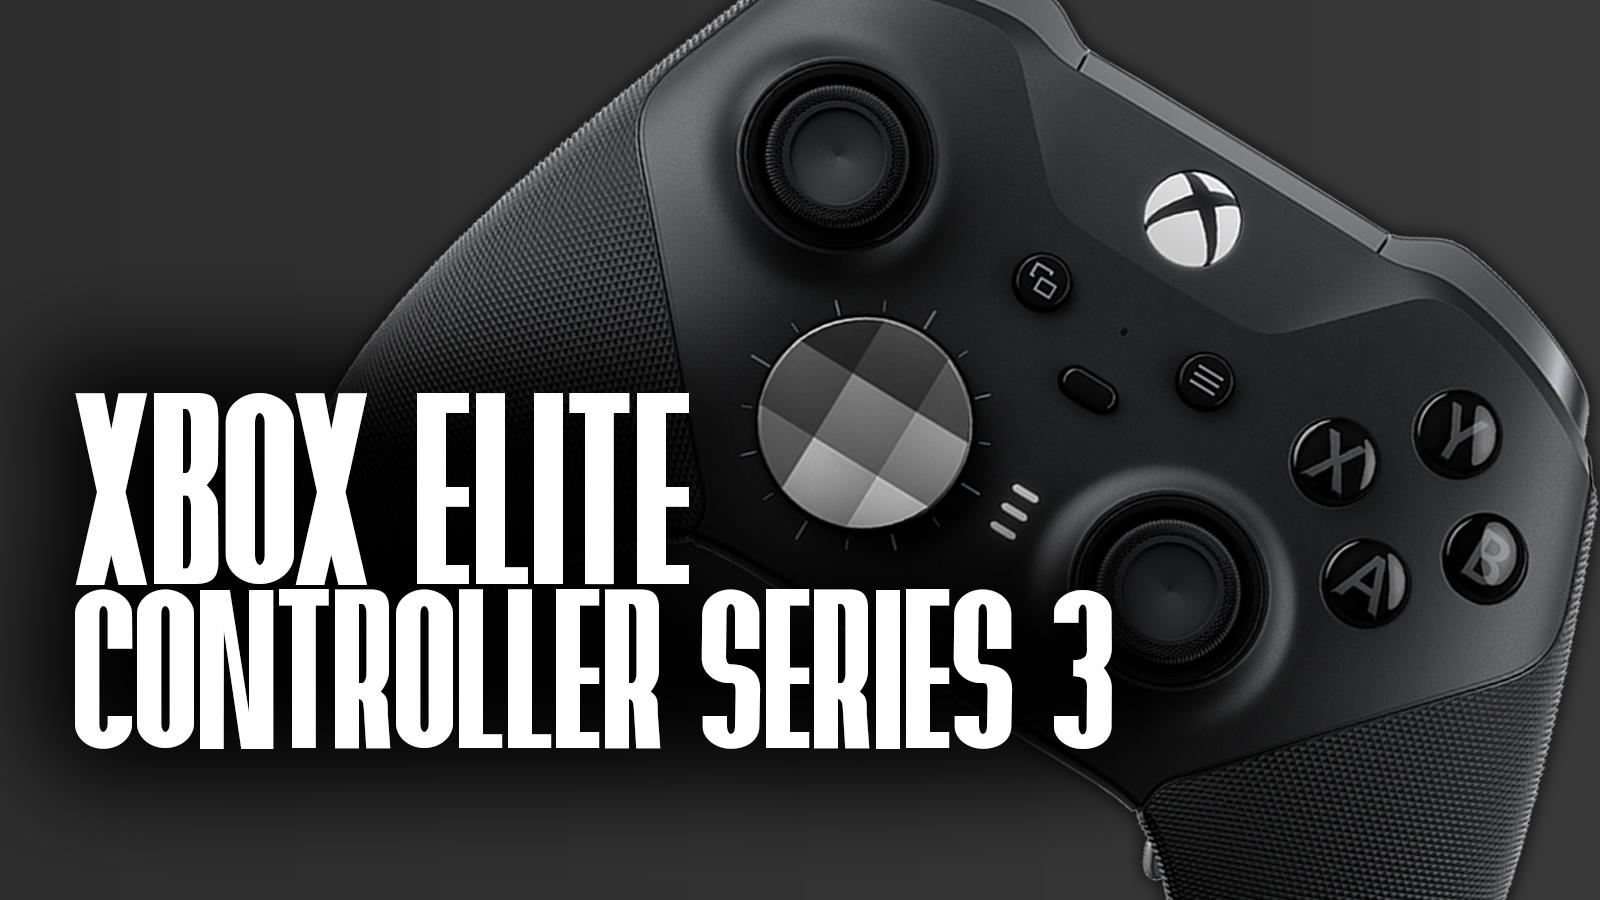 Xbox Elite Controller Series 3